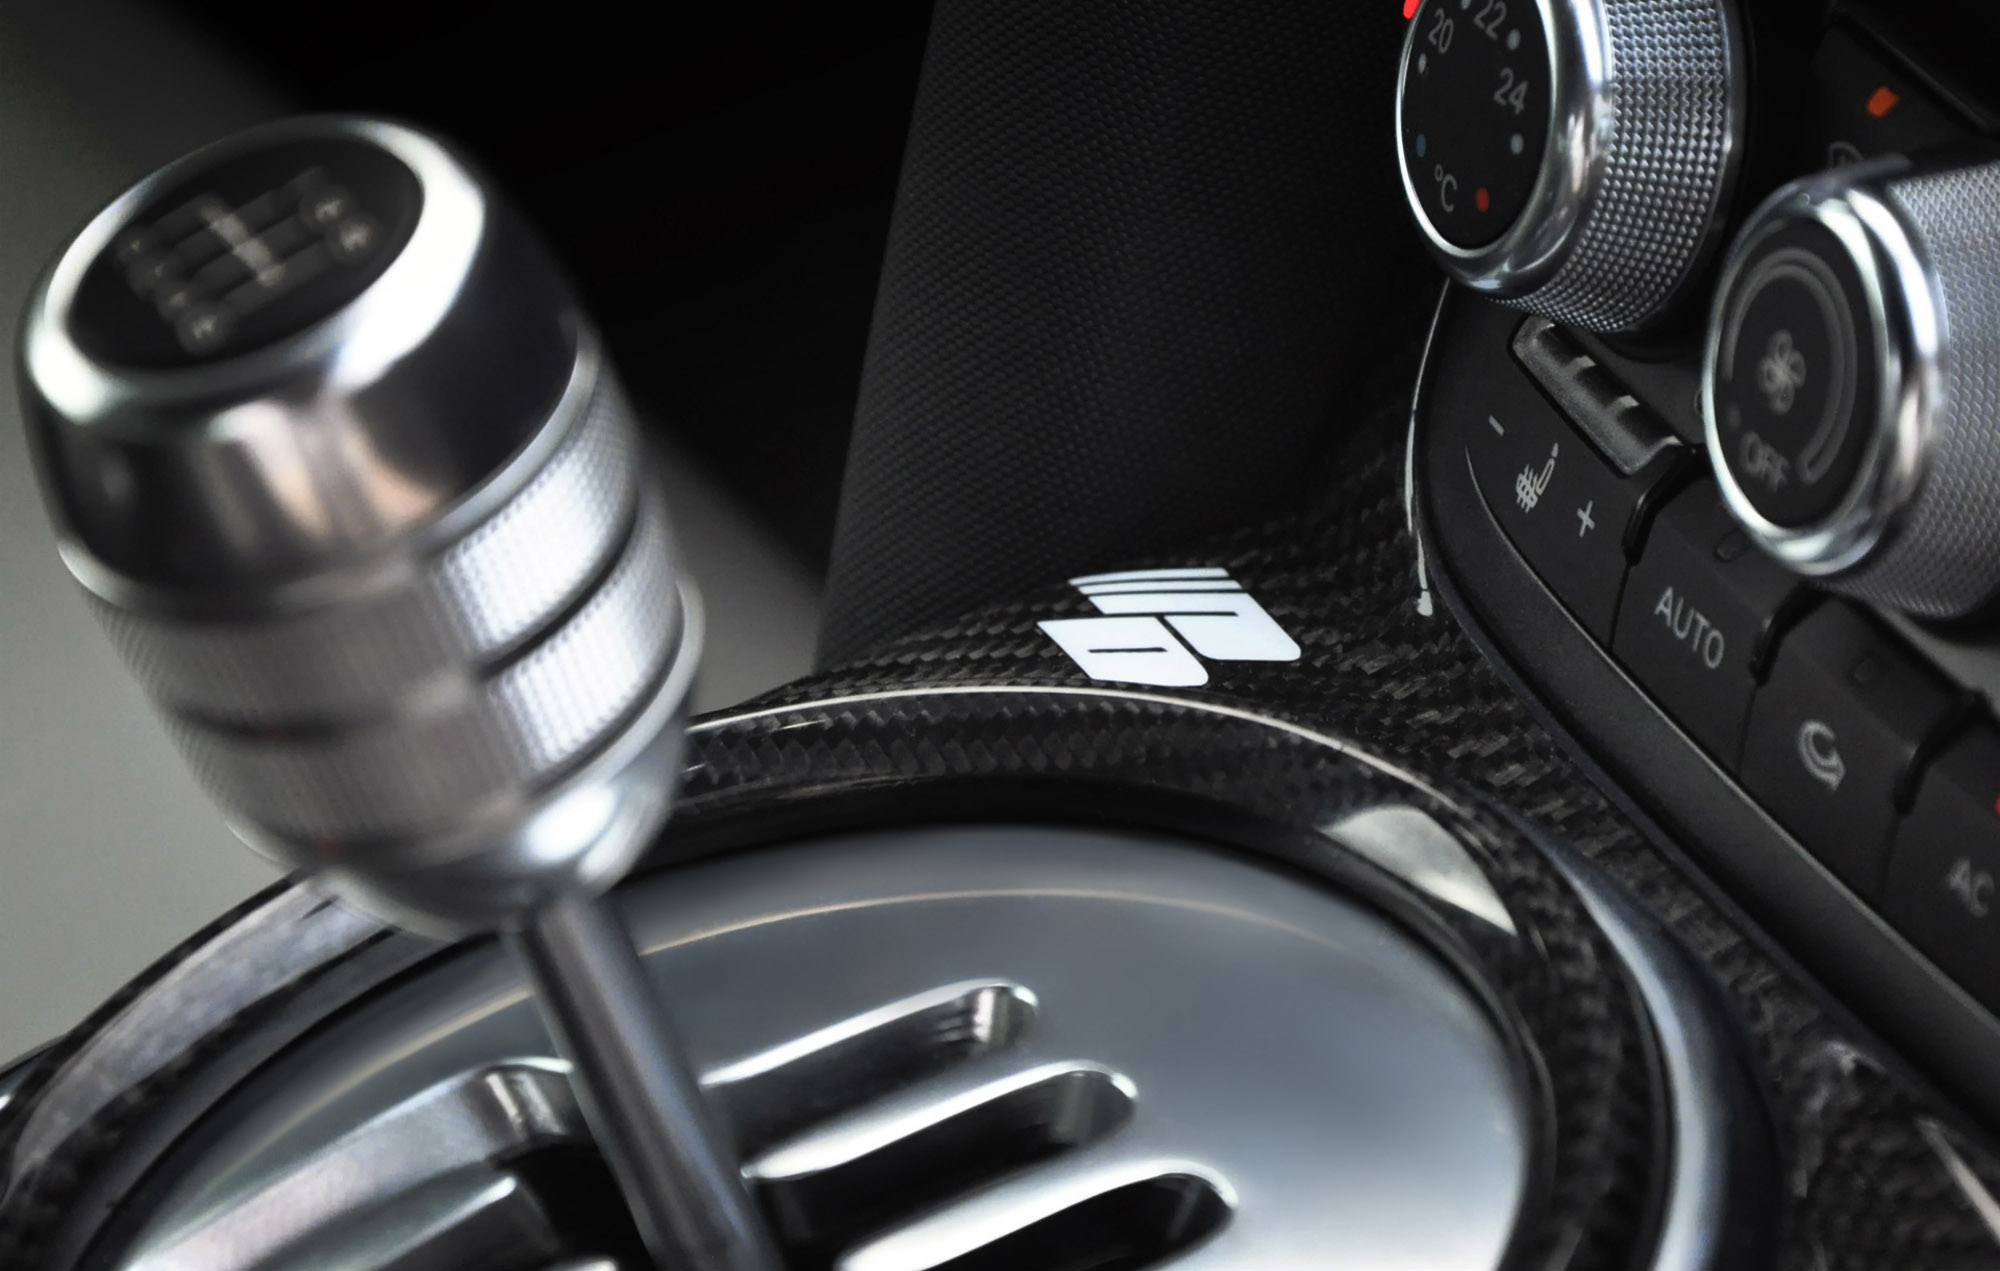 Prior-Design Audi R8 Carbon Limited Edition